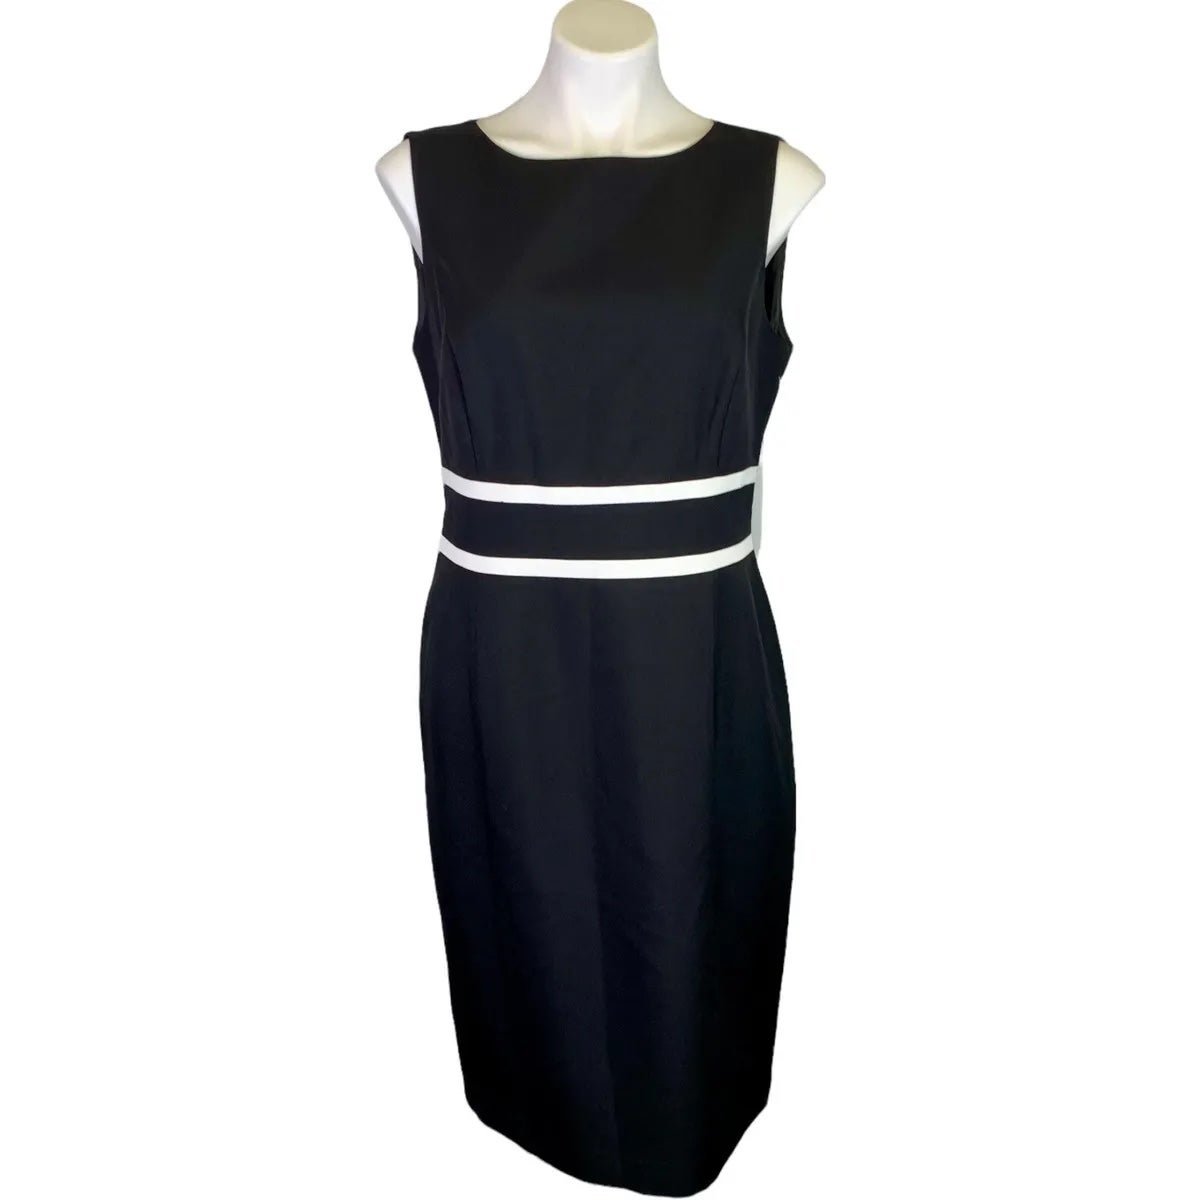 Custom Black label by Evan-Picone dress FJTnOb9NL outlet online shop